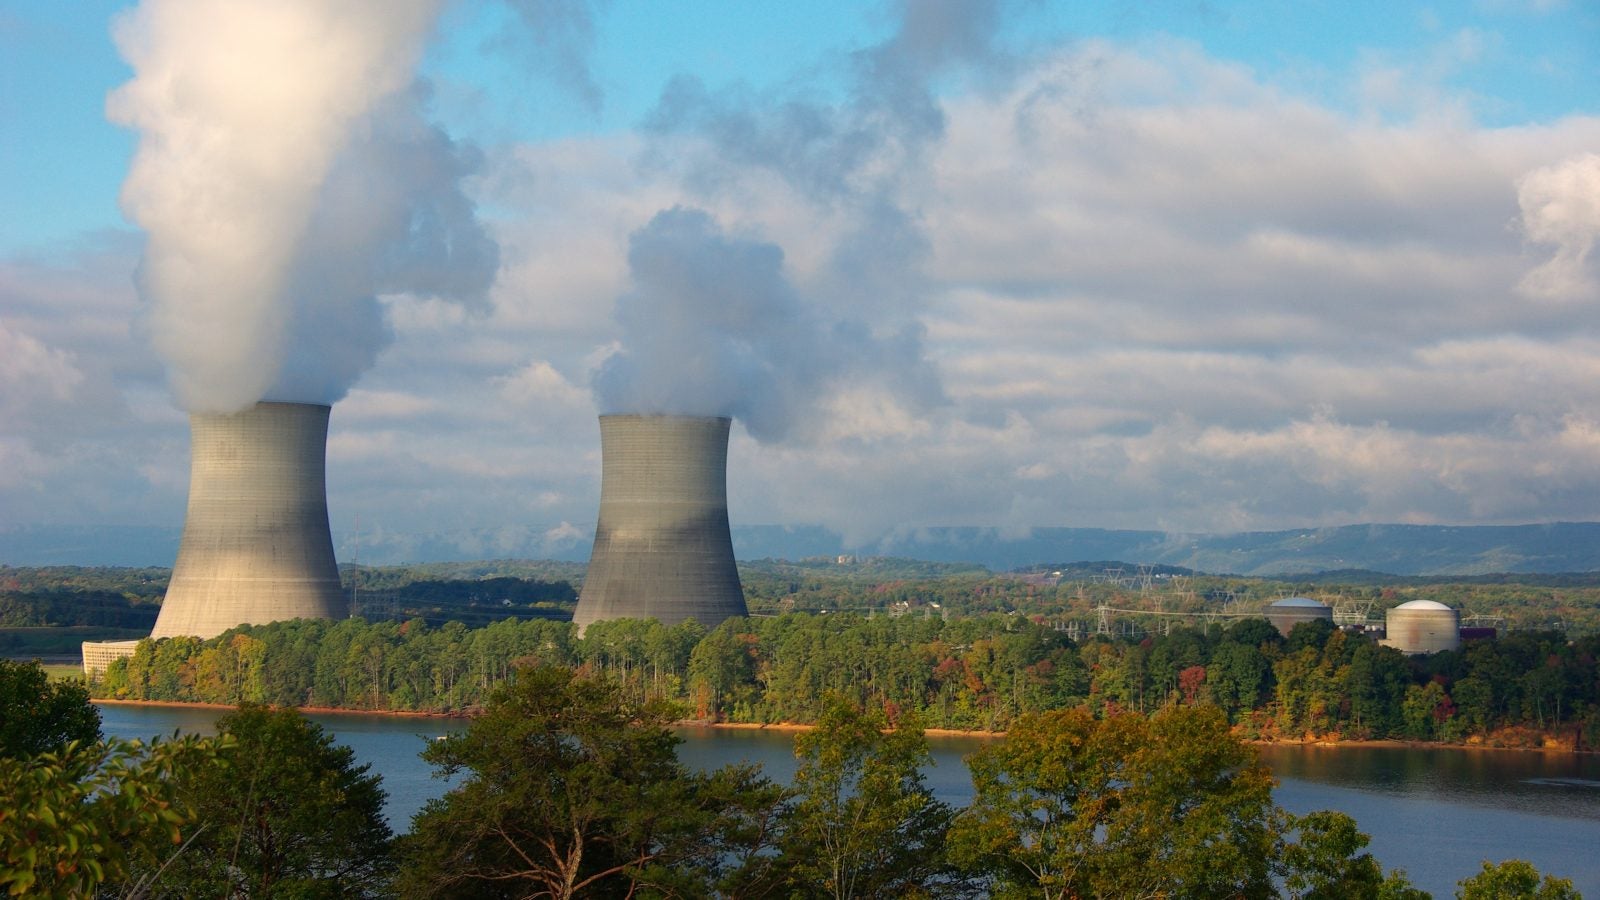 Sequoyah Nuclear Power Plant